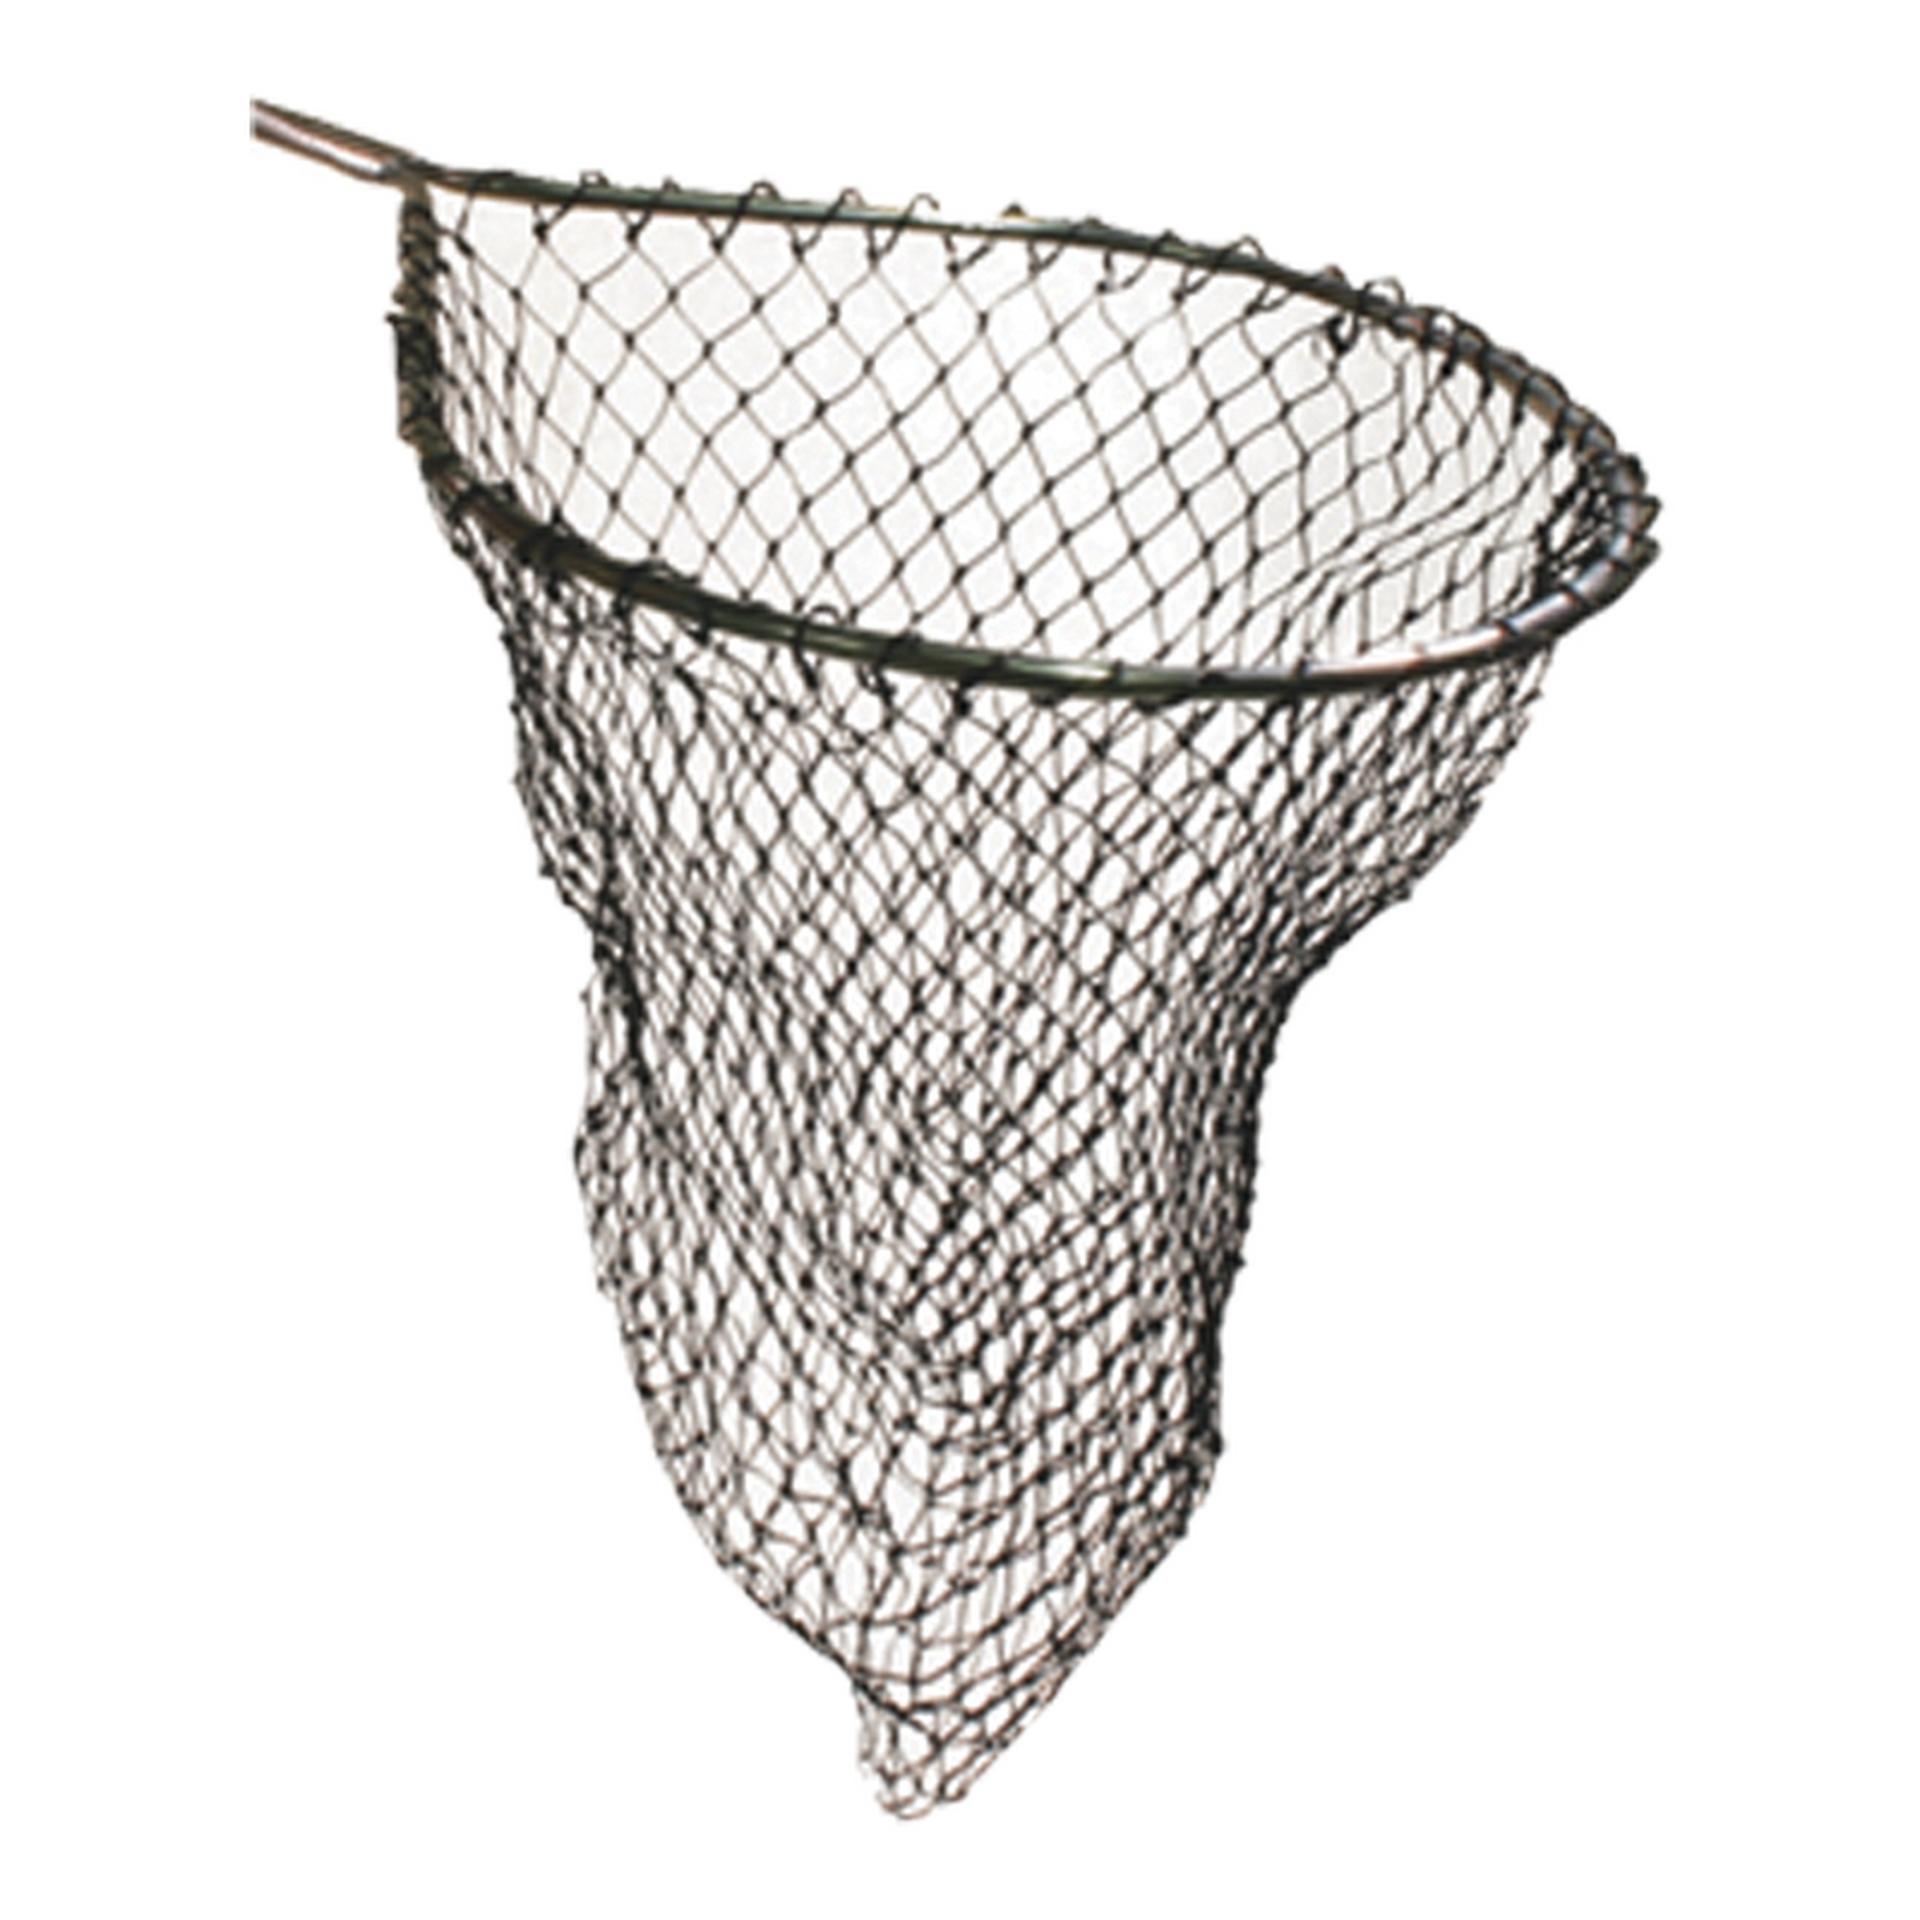 Frabill 3062 Sportsman Seamless Rubber Landing Net with